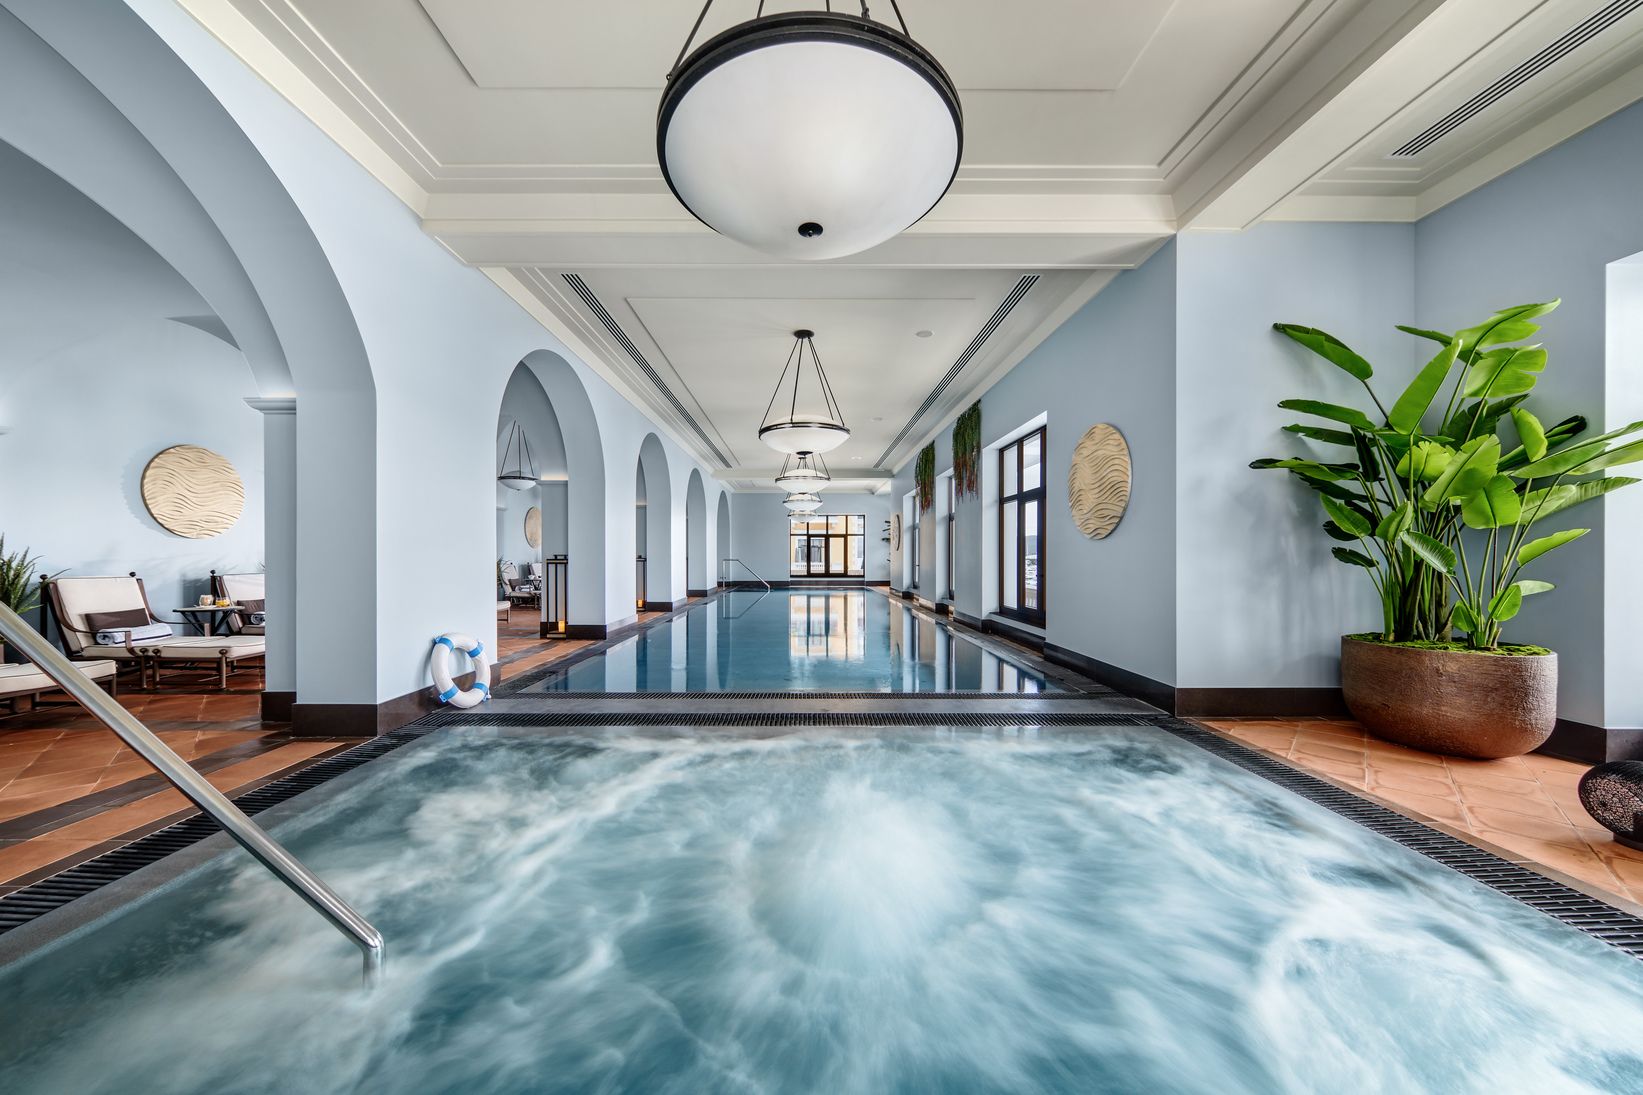 Regent Spa feature indoor pool with Jacuzzi